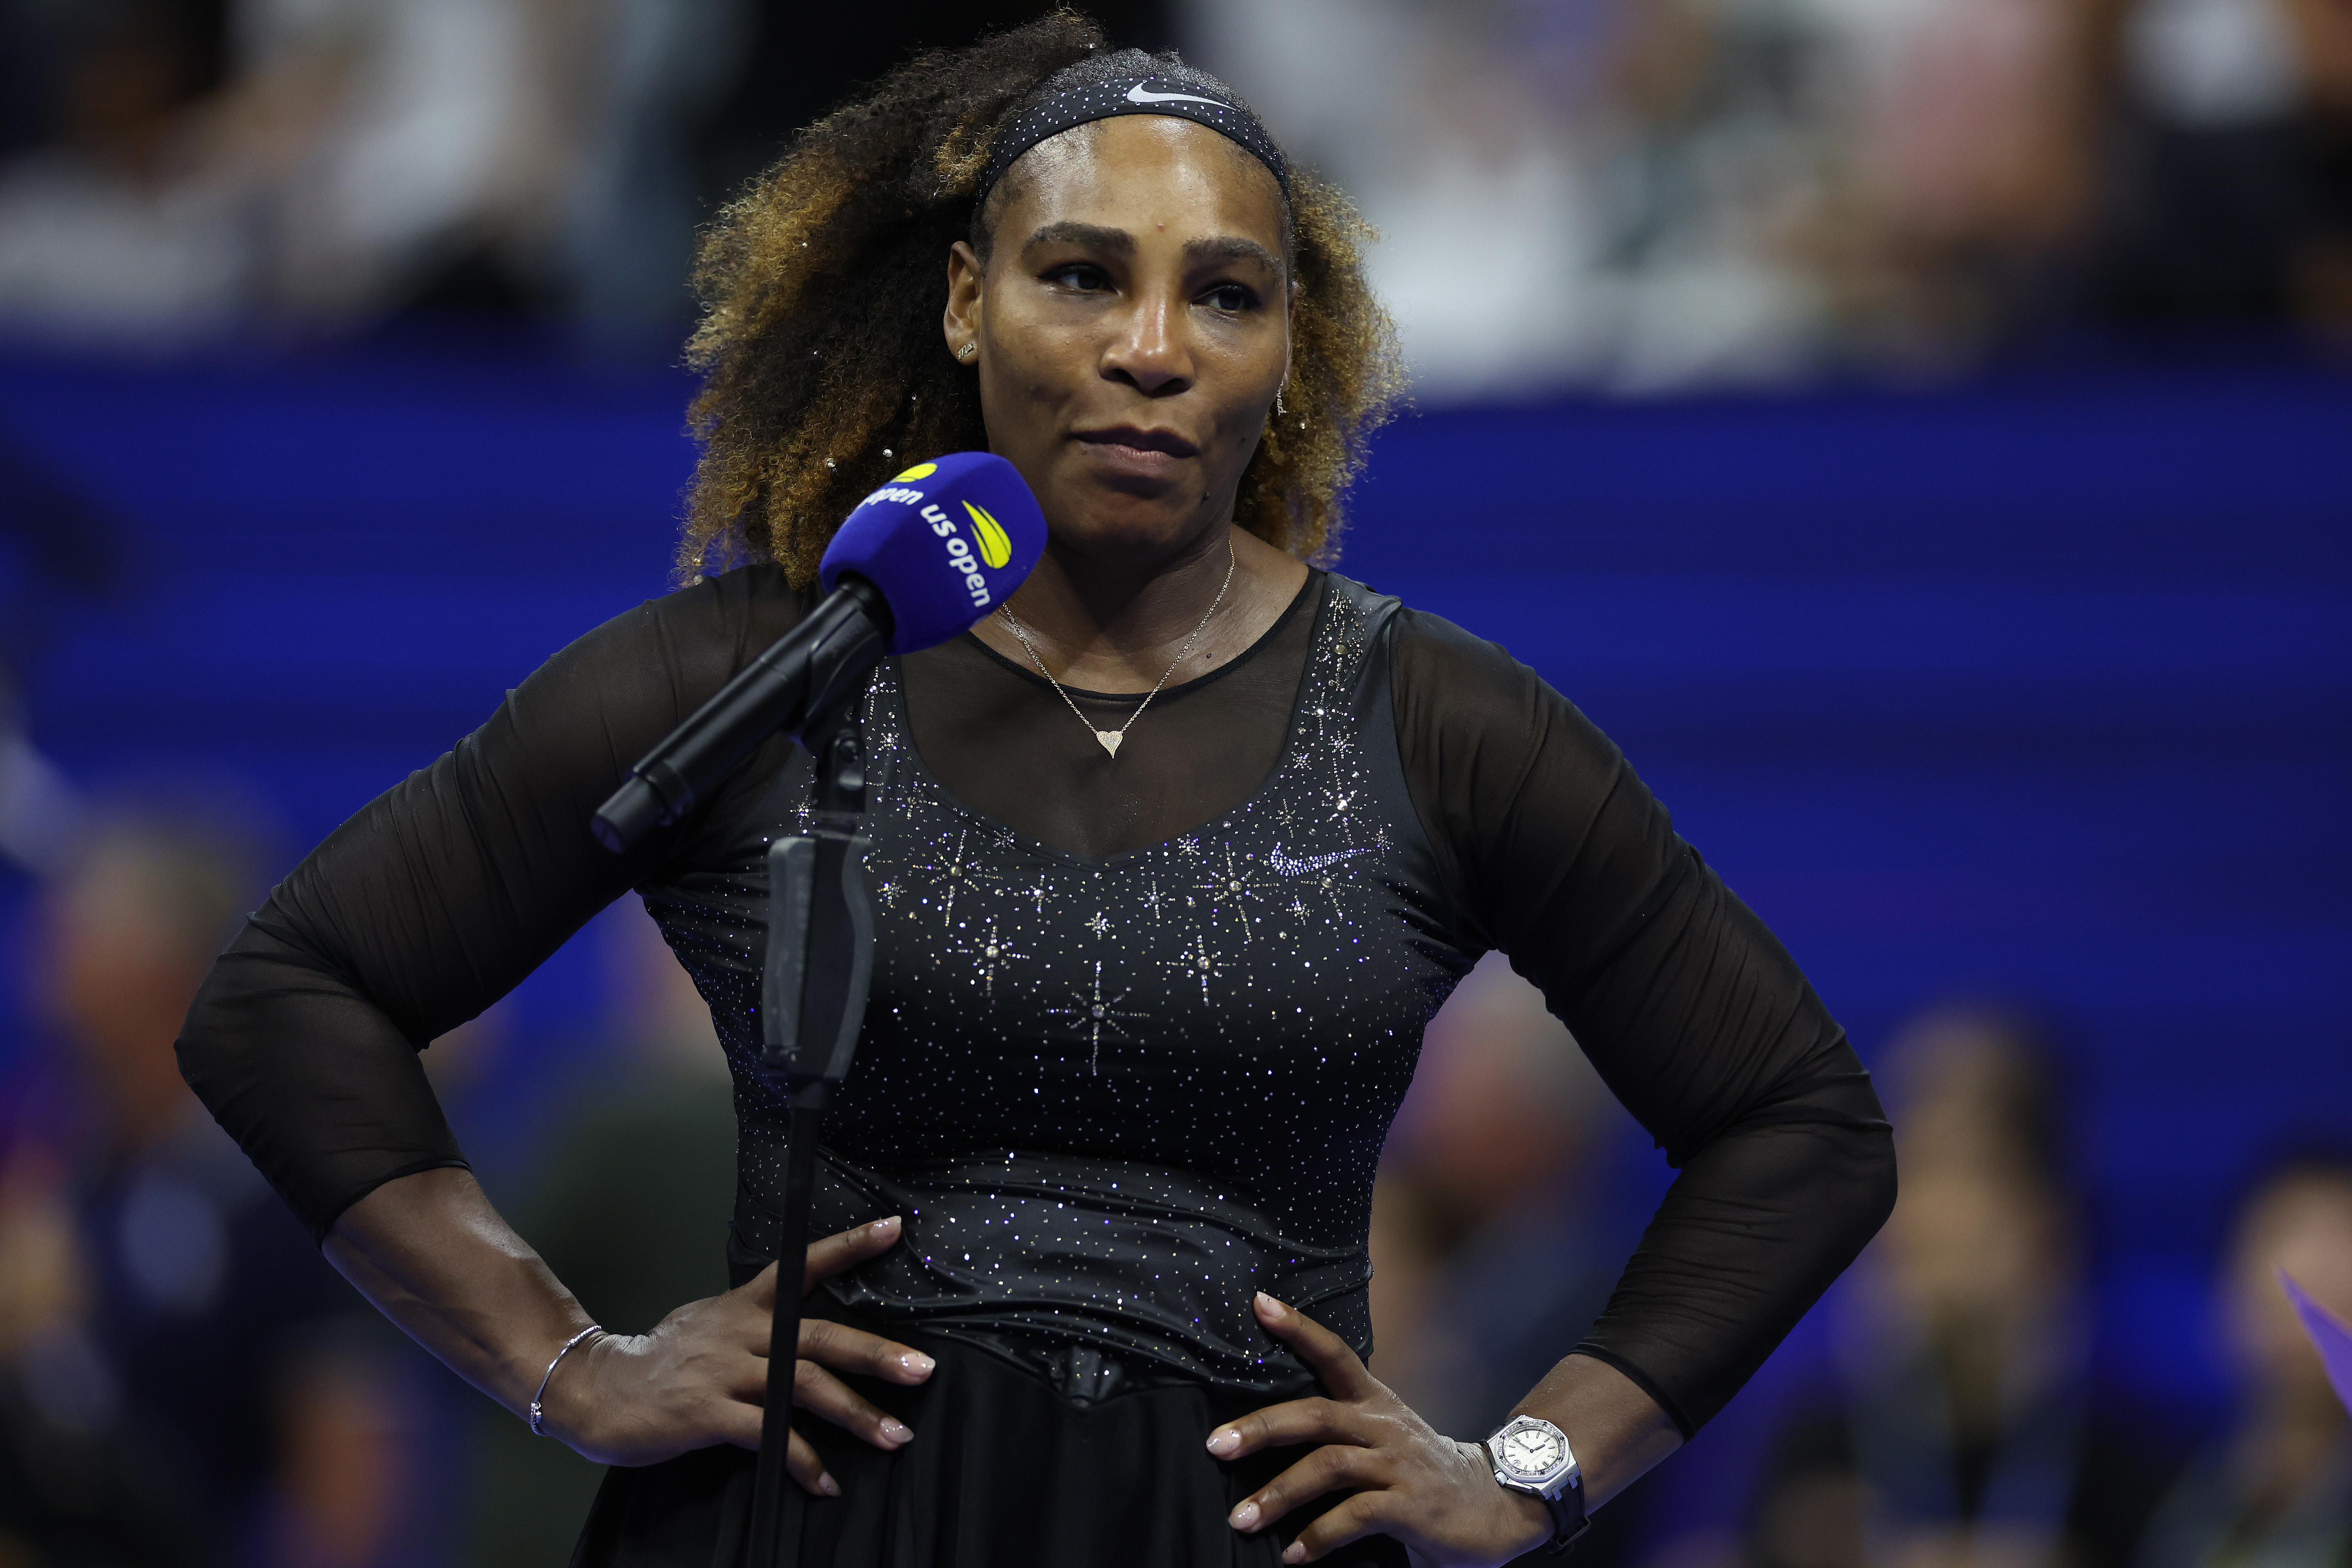 Serena Williams speaks after her match.